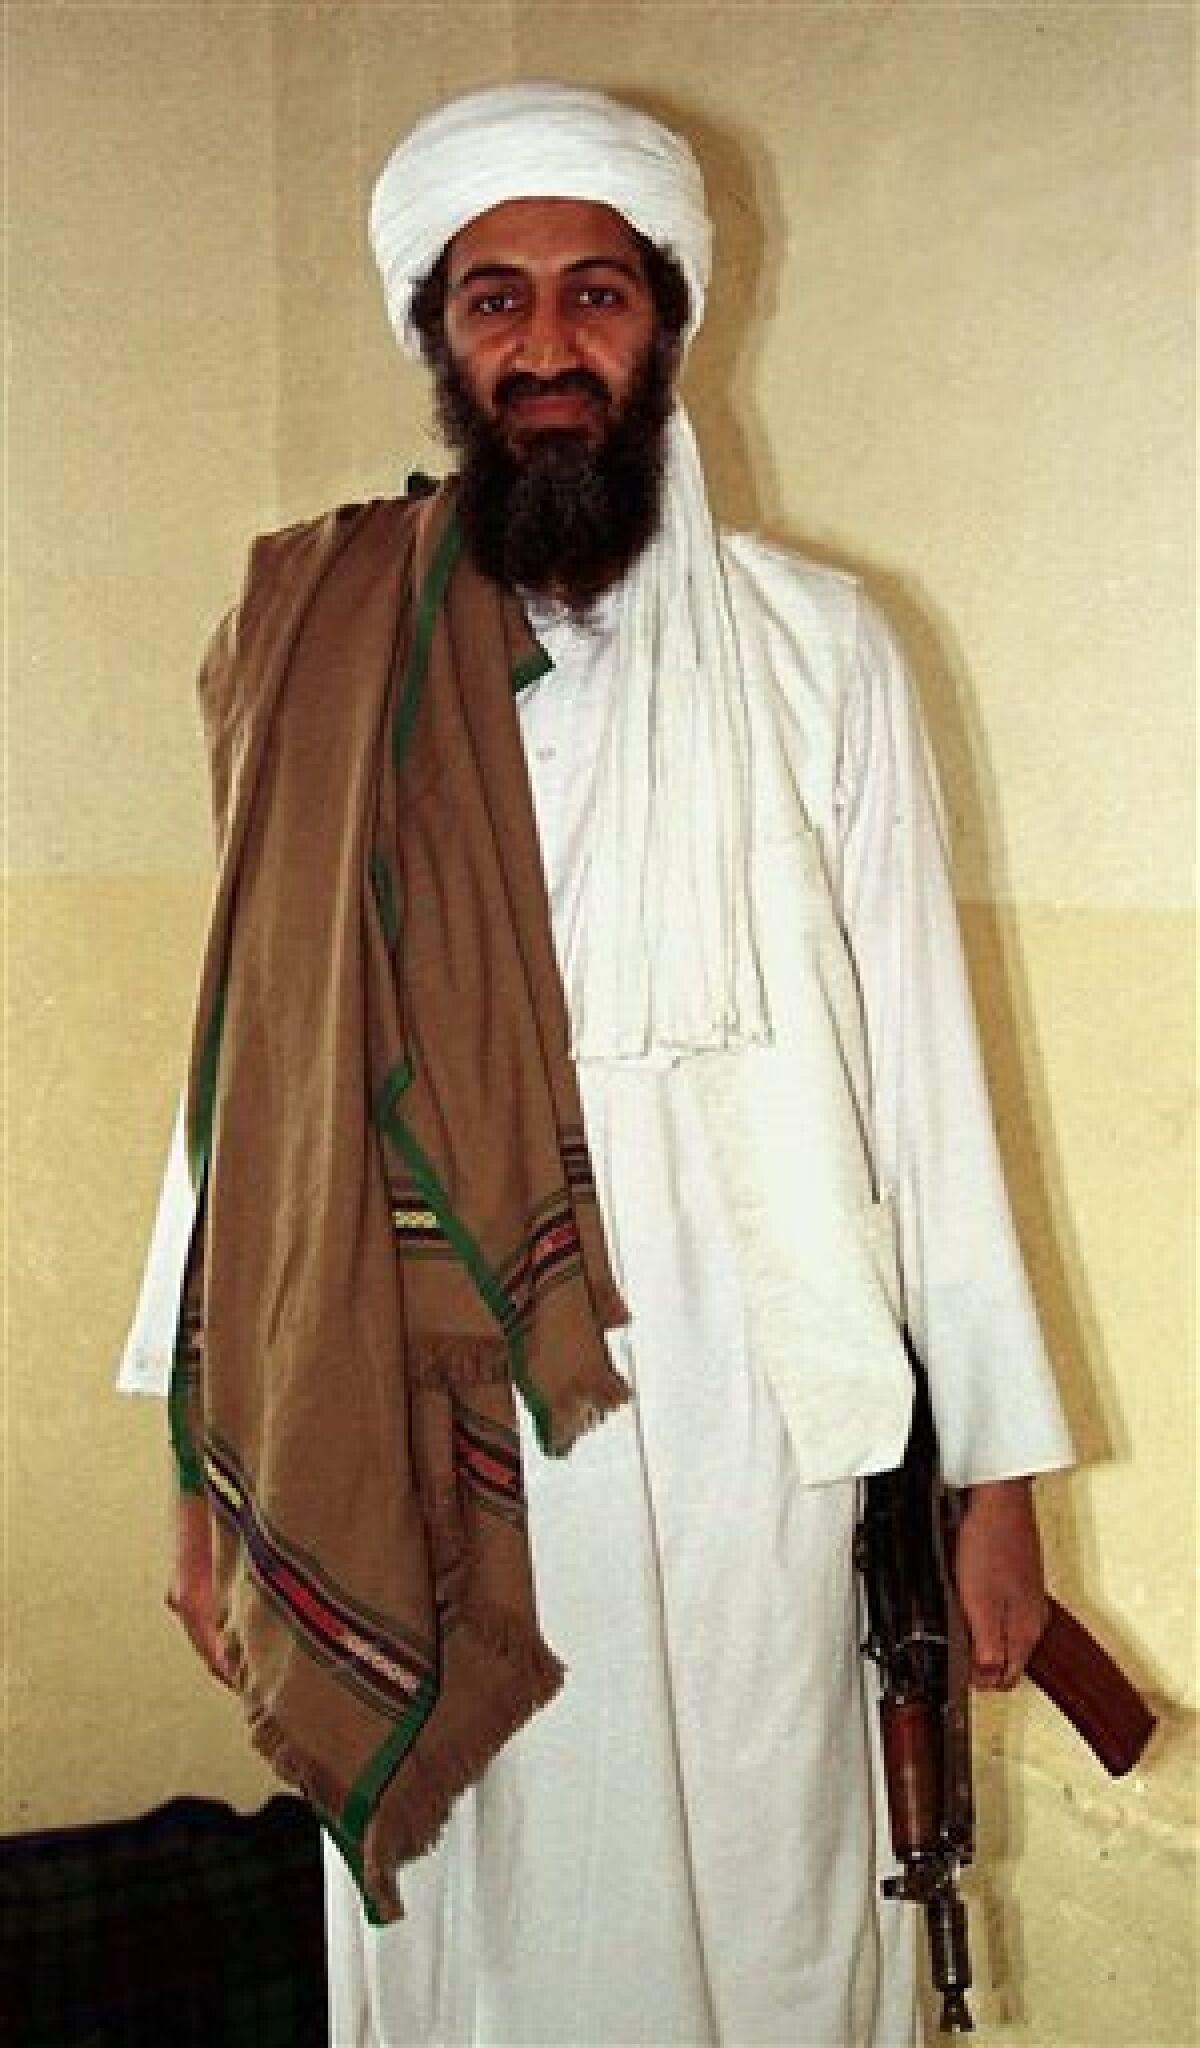 Bin Laden threatens Americans in new tape - The San Diego Union-Tribune